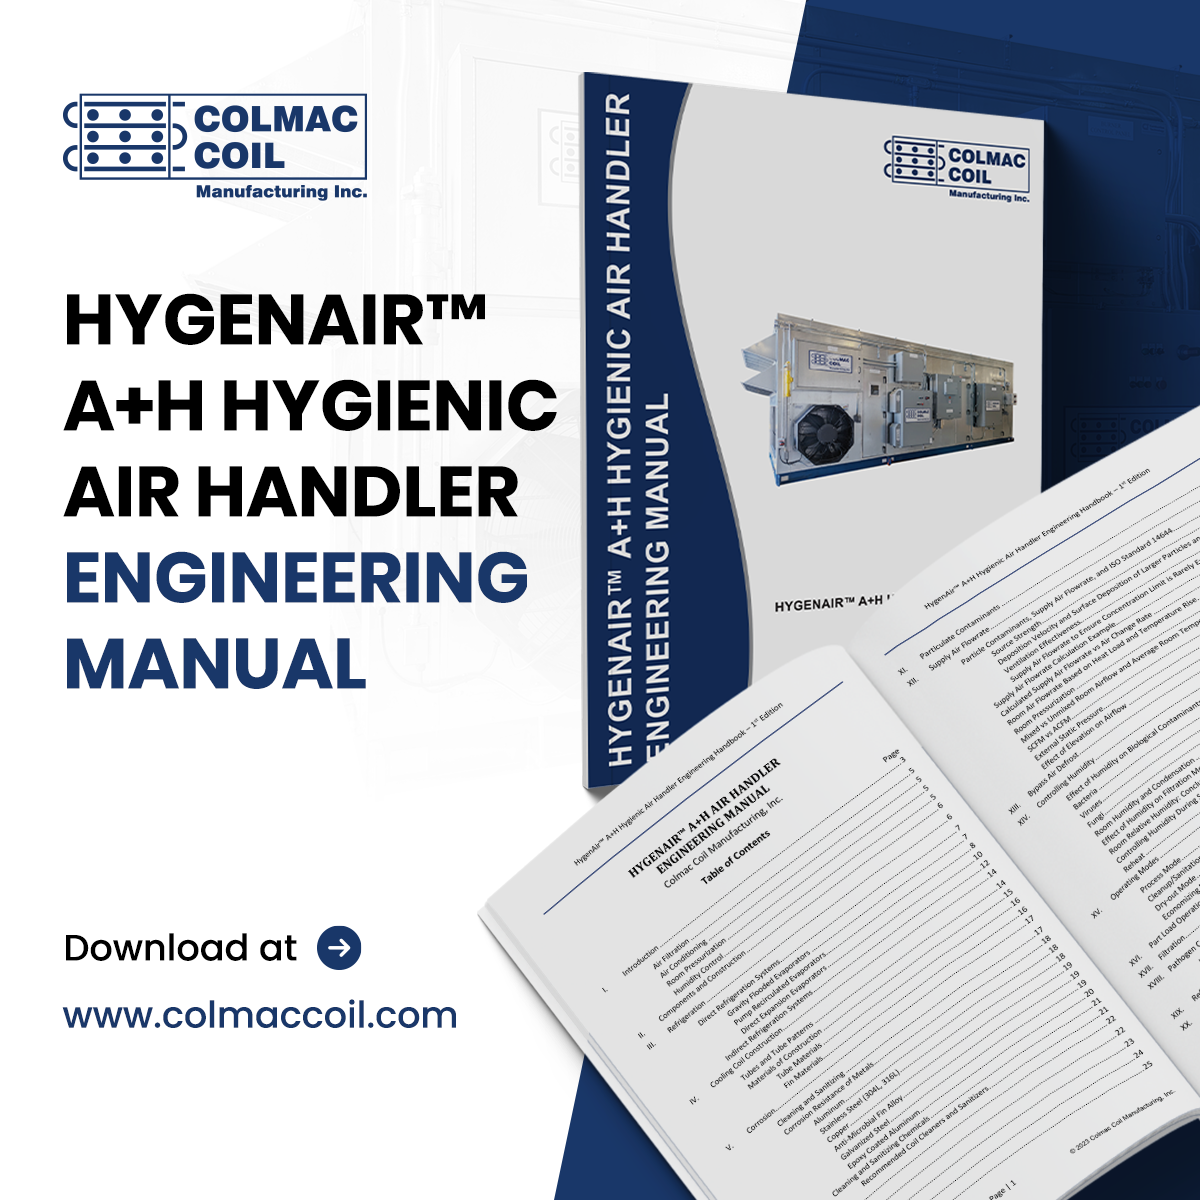 HygenAir™ Hygienic Air Handler Engineering Manual is Now Available